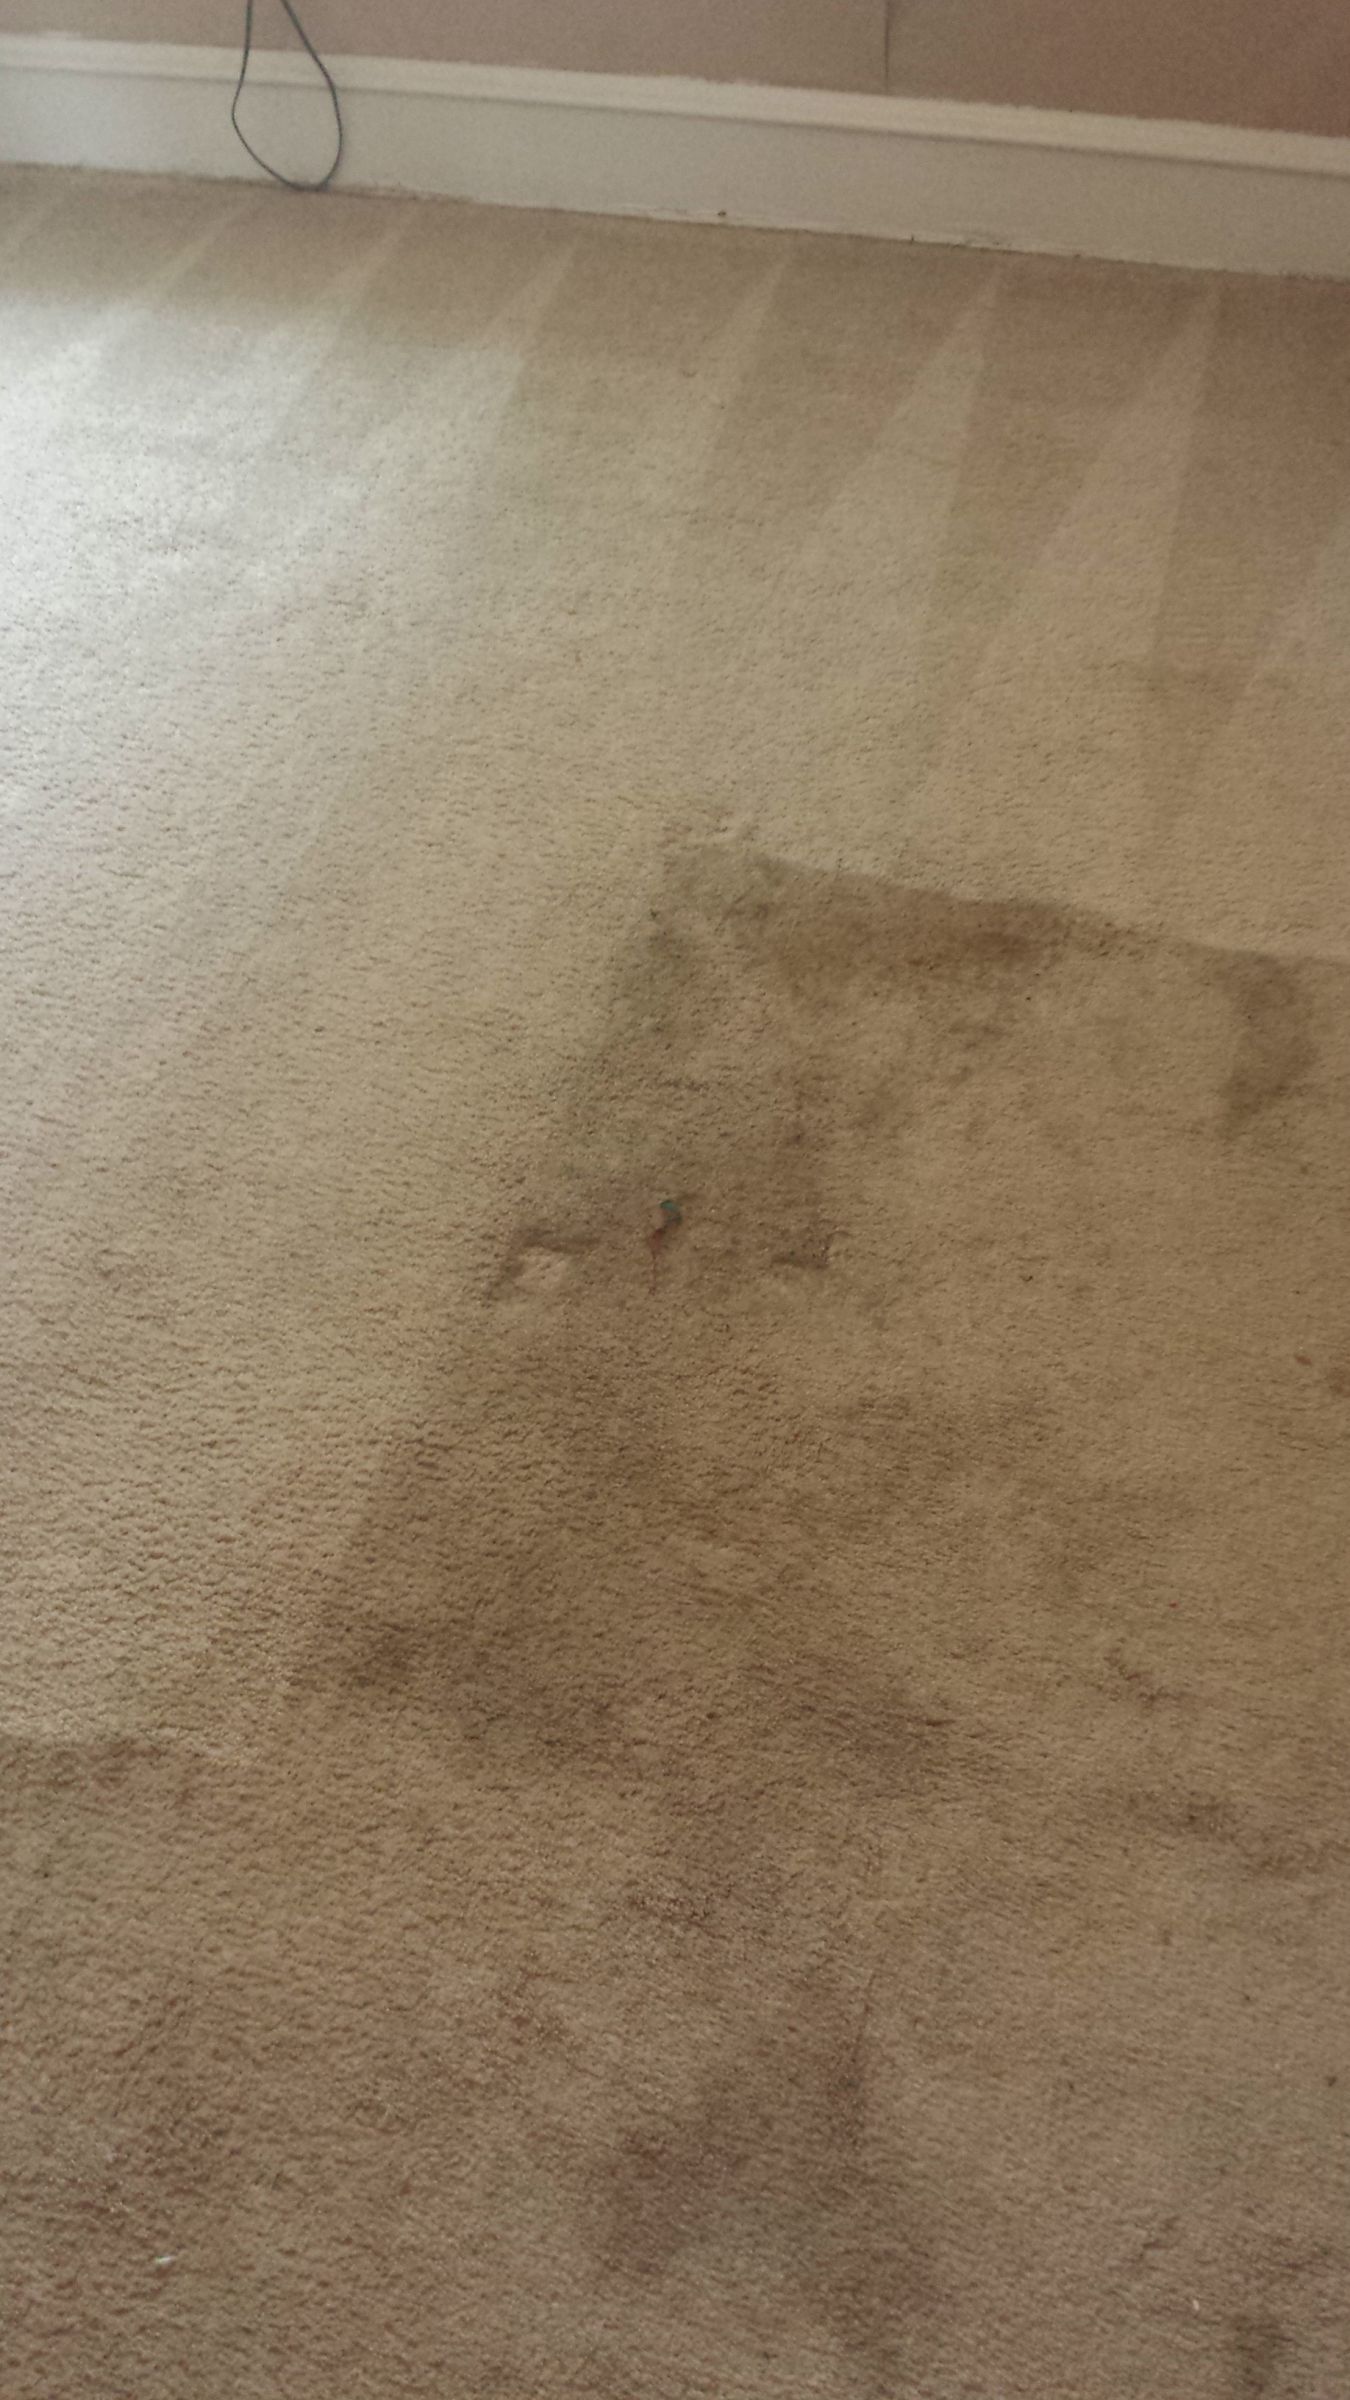 Cherry Hill Carpet Cleaner. How Experts Fix Carpet Dents